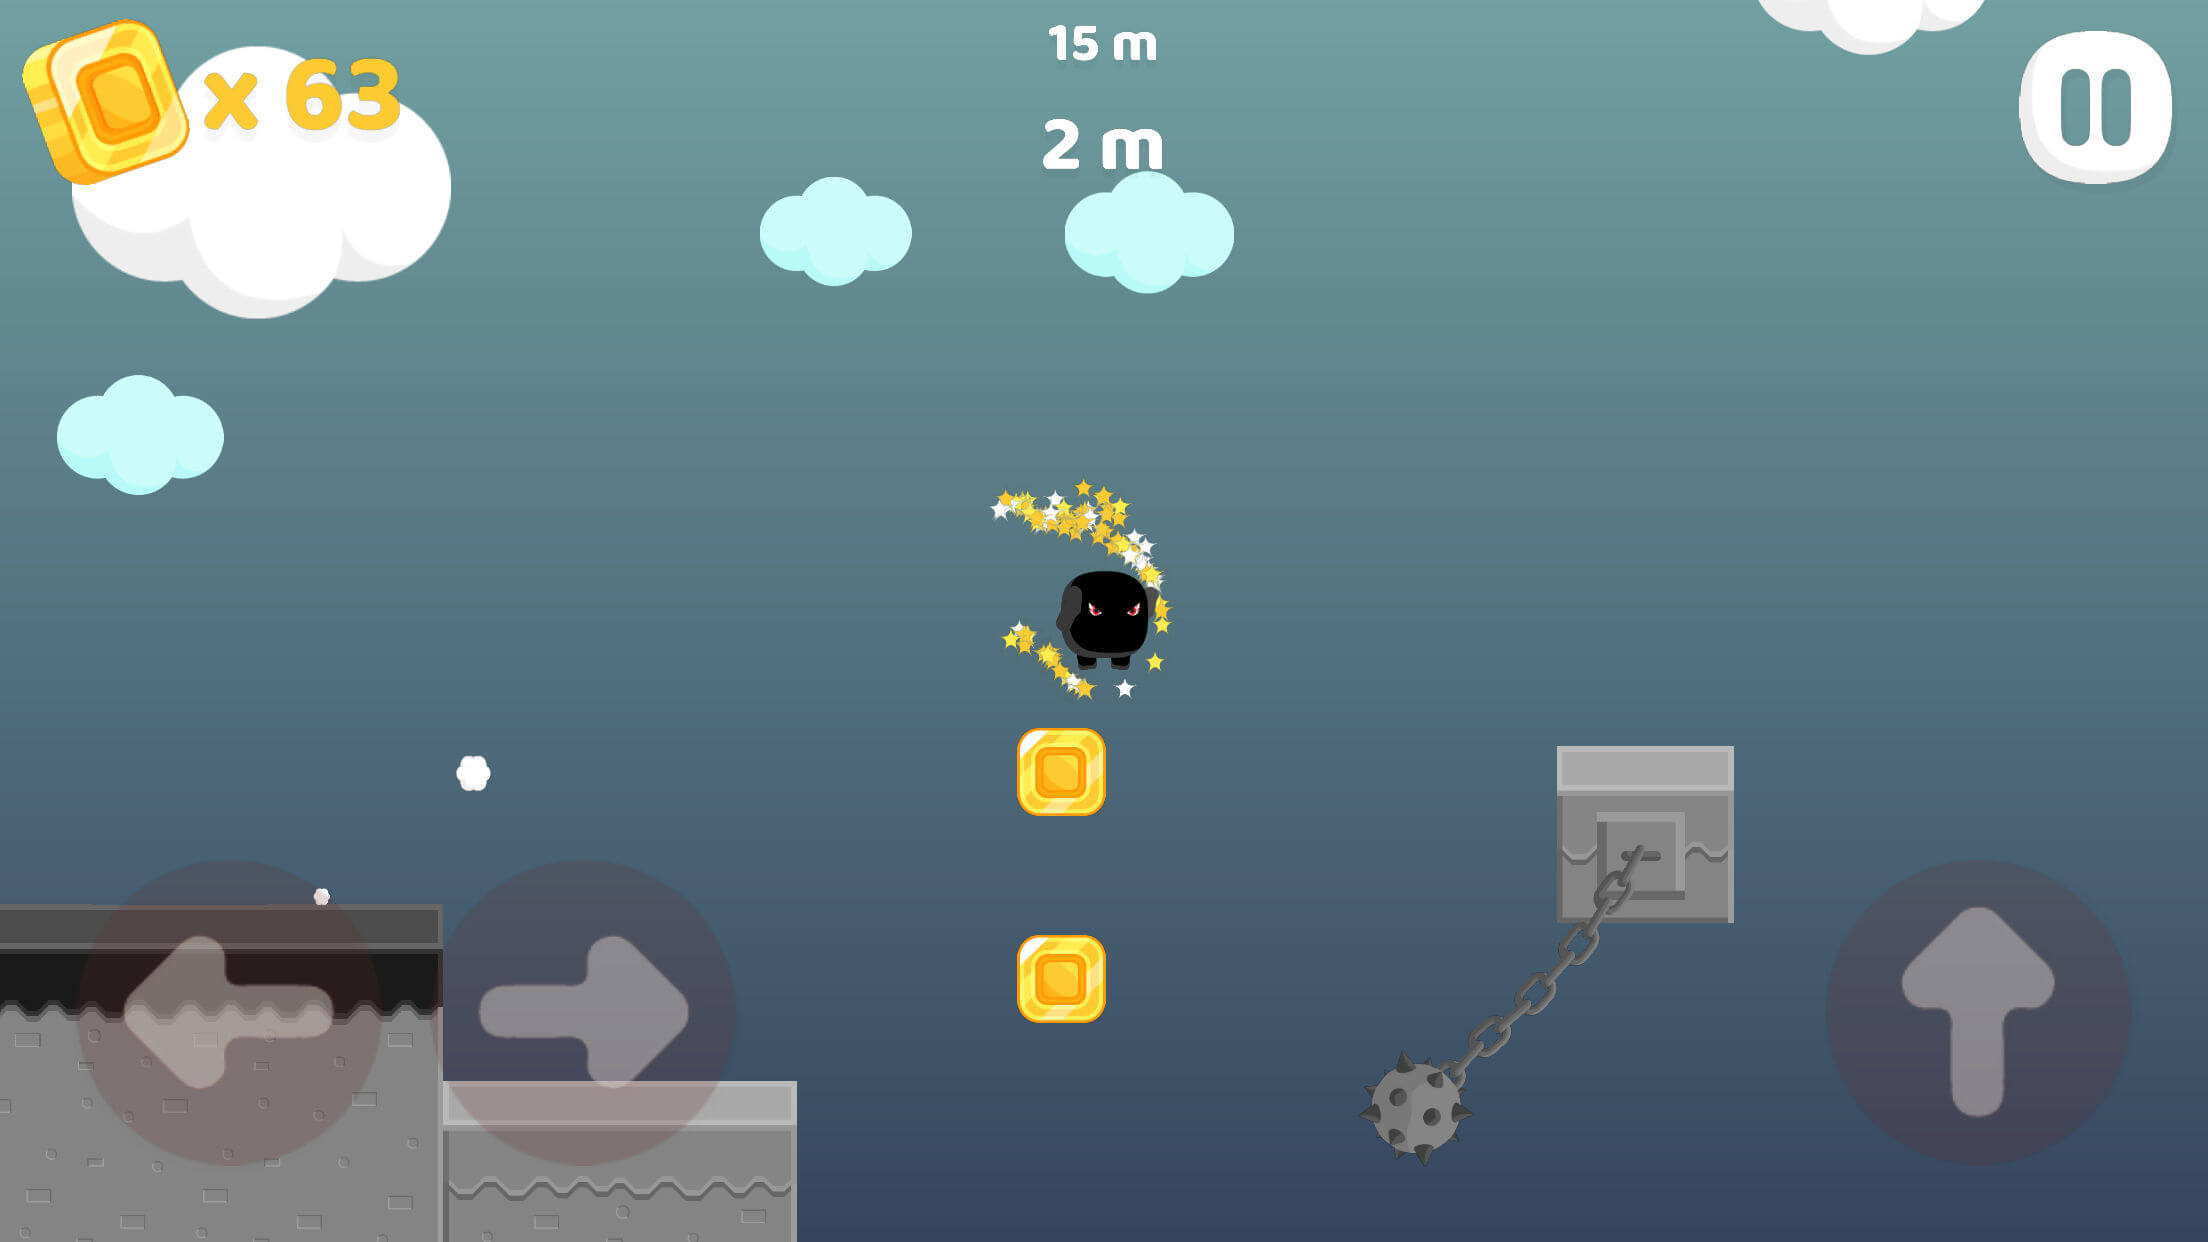 Beefo Black Splash Game Apple AppStore - Google Play Store Image 2